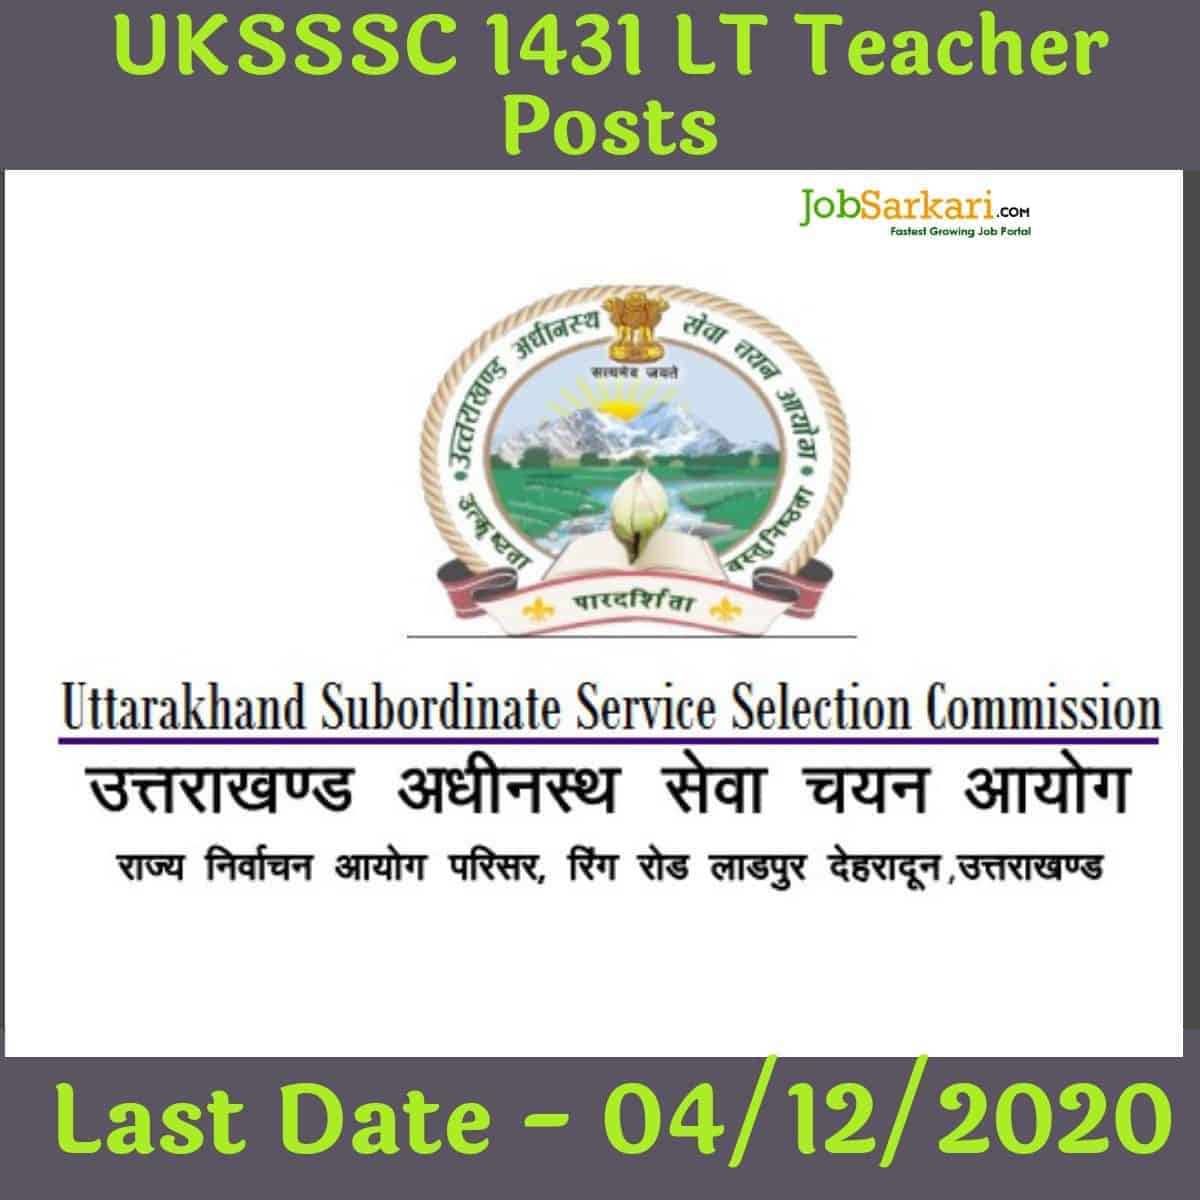 UKSSSC 1431 LT Teacher Posts 1